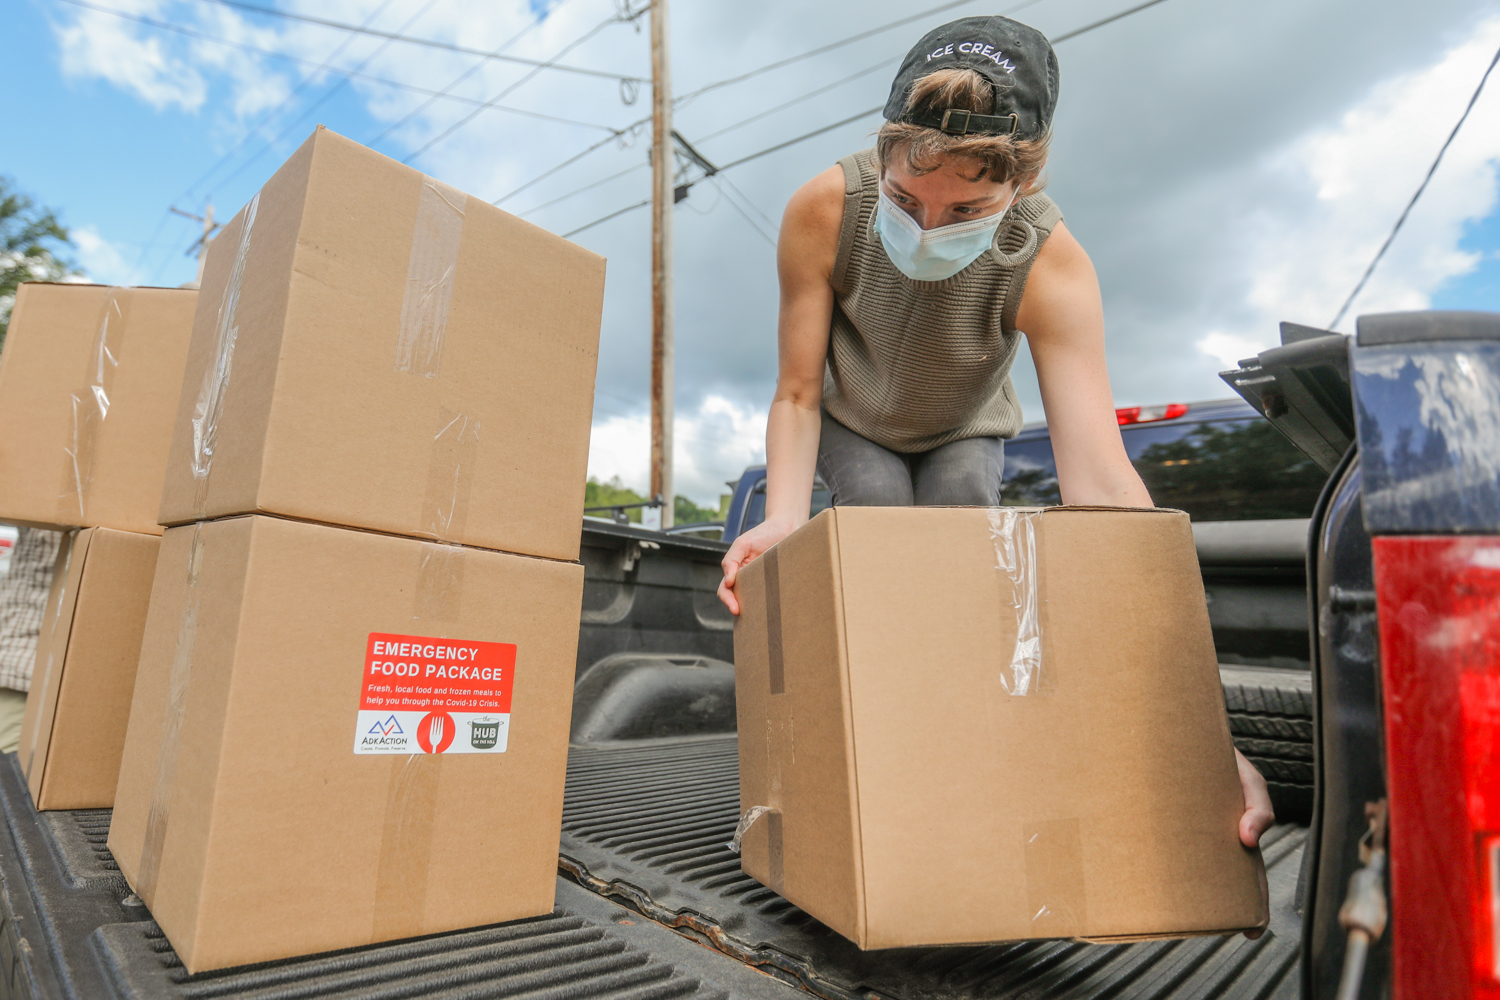 A woman wearing a mask loads boxes onto a truck.